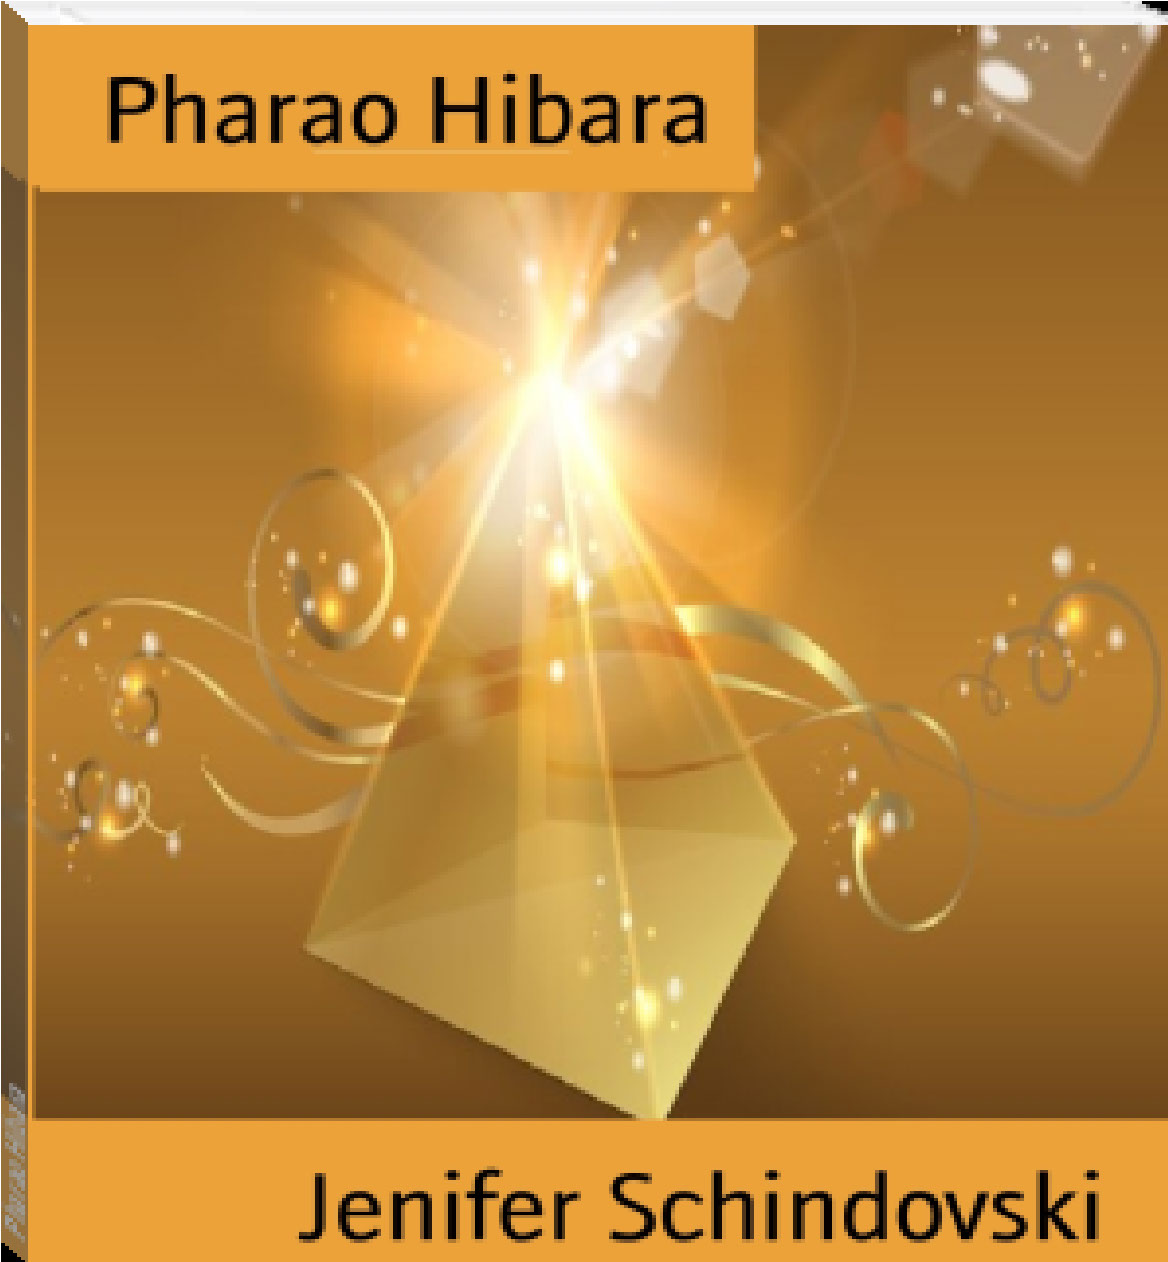 Pharao Hibara rendition image